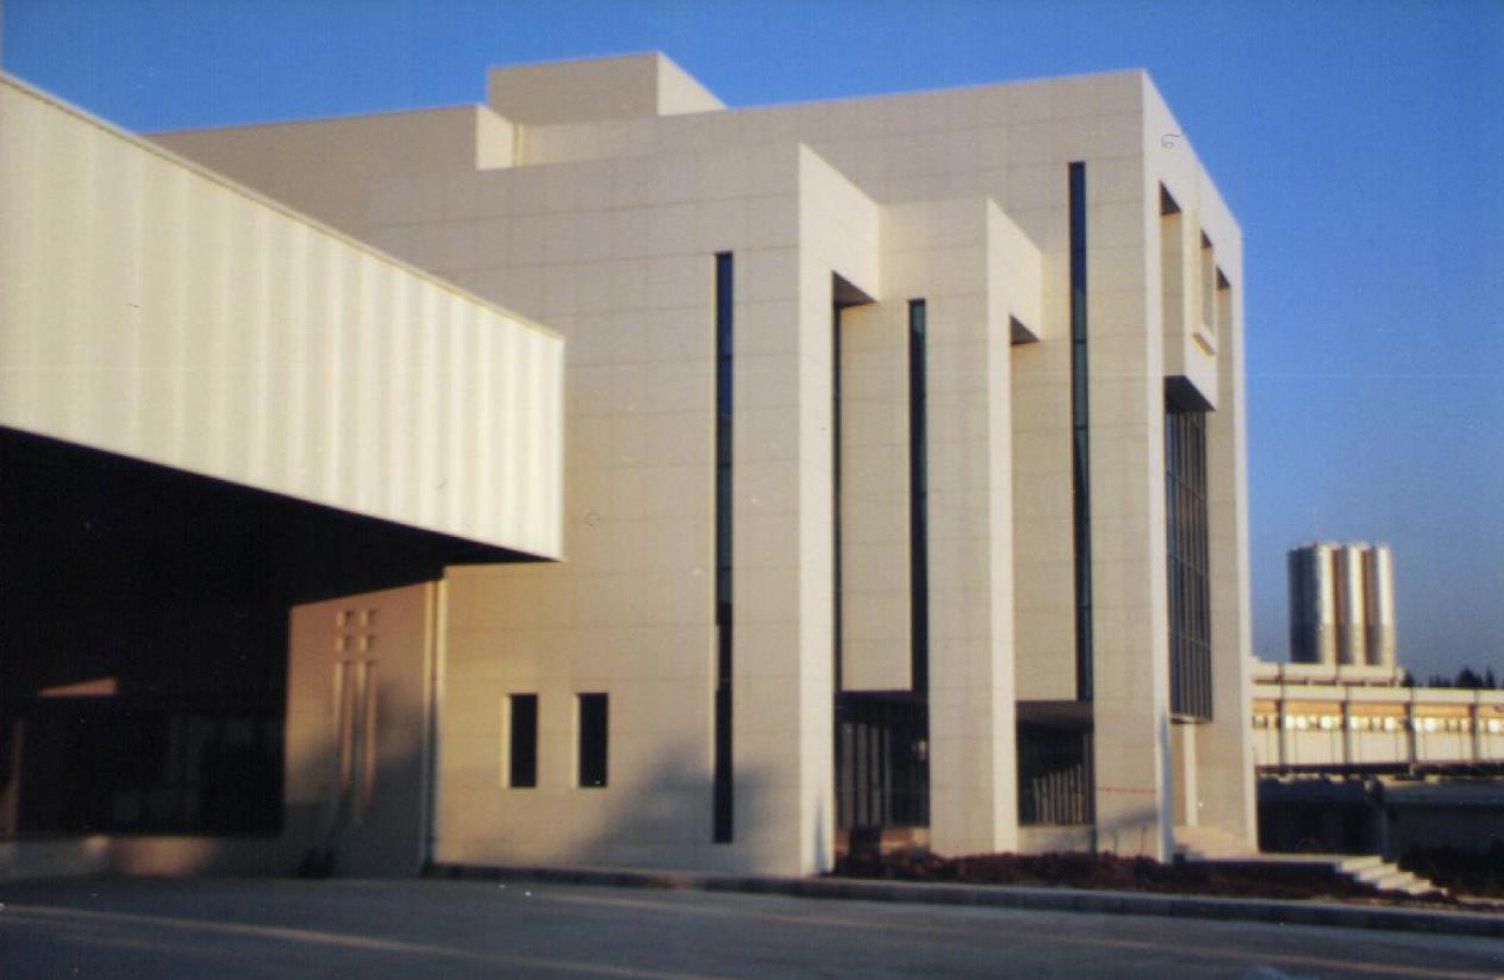 Kent Plant Headquarters and Distribution Center